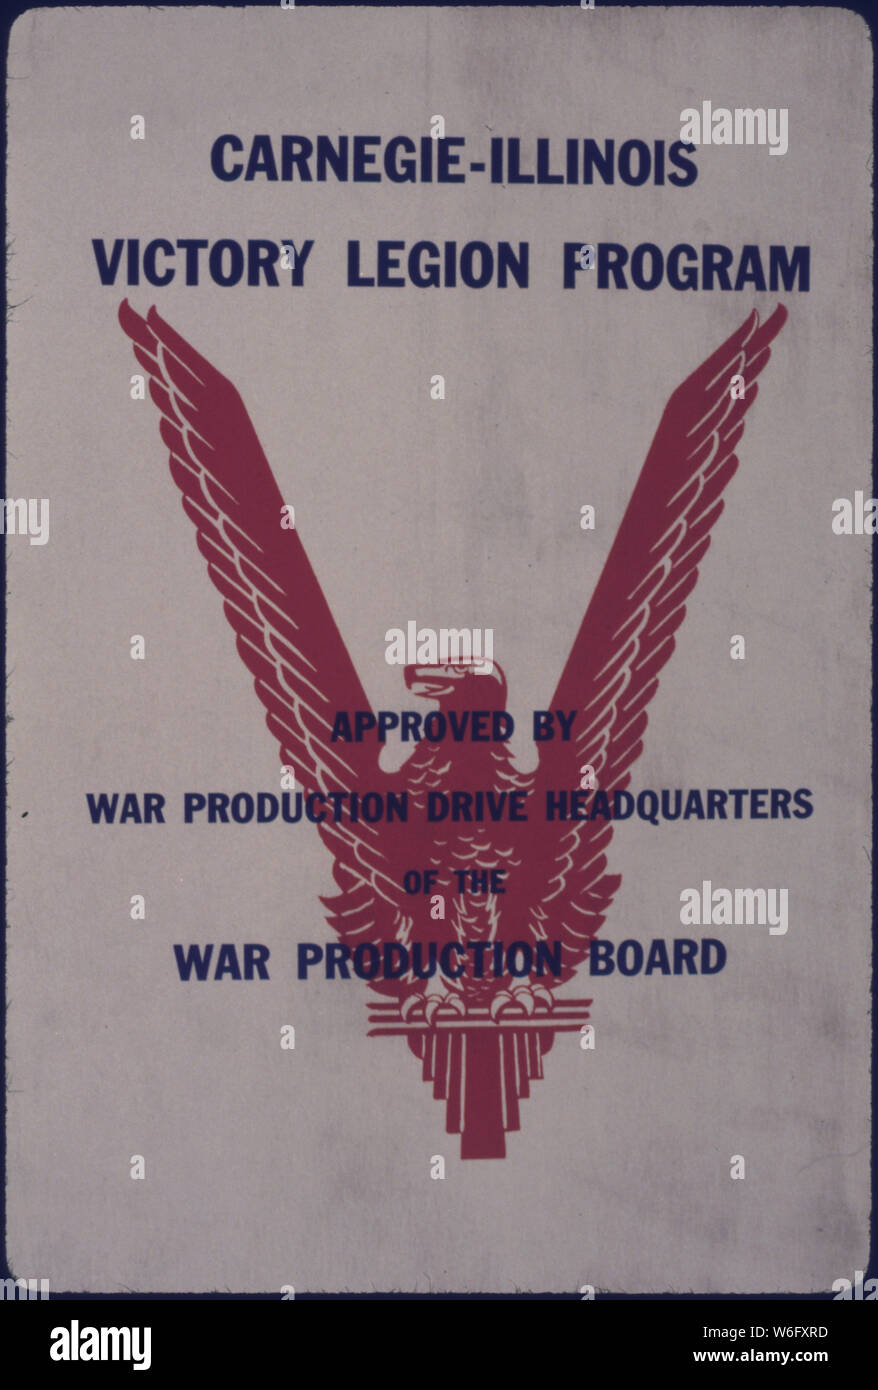 Carnegie-Illinois Sieg Legion Programm Stockfoto